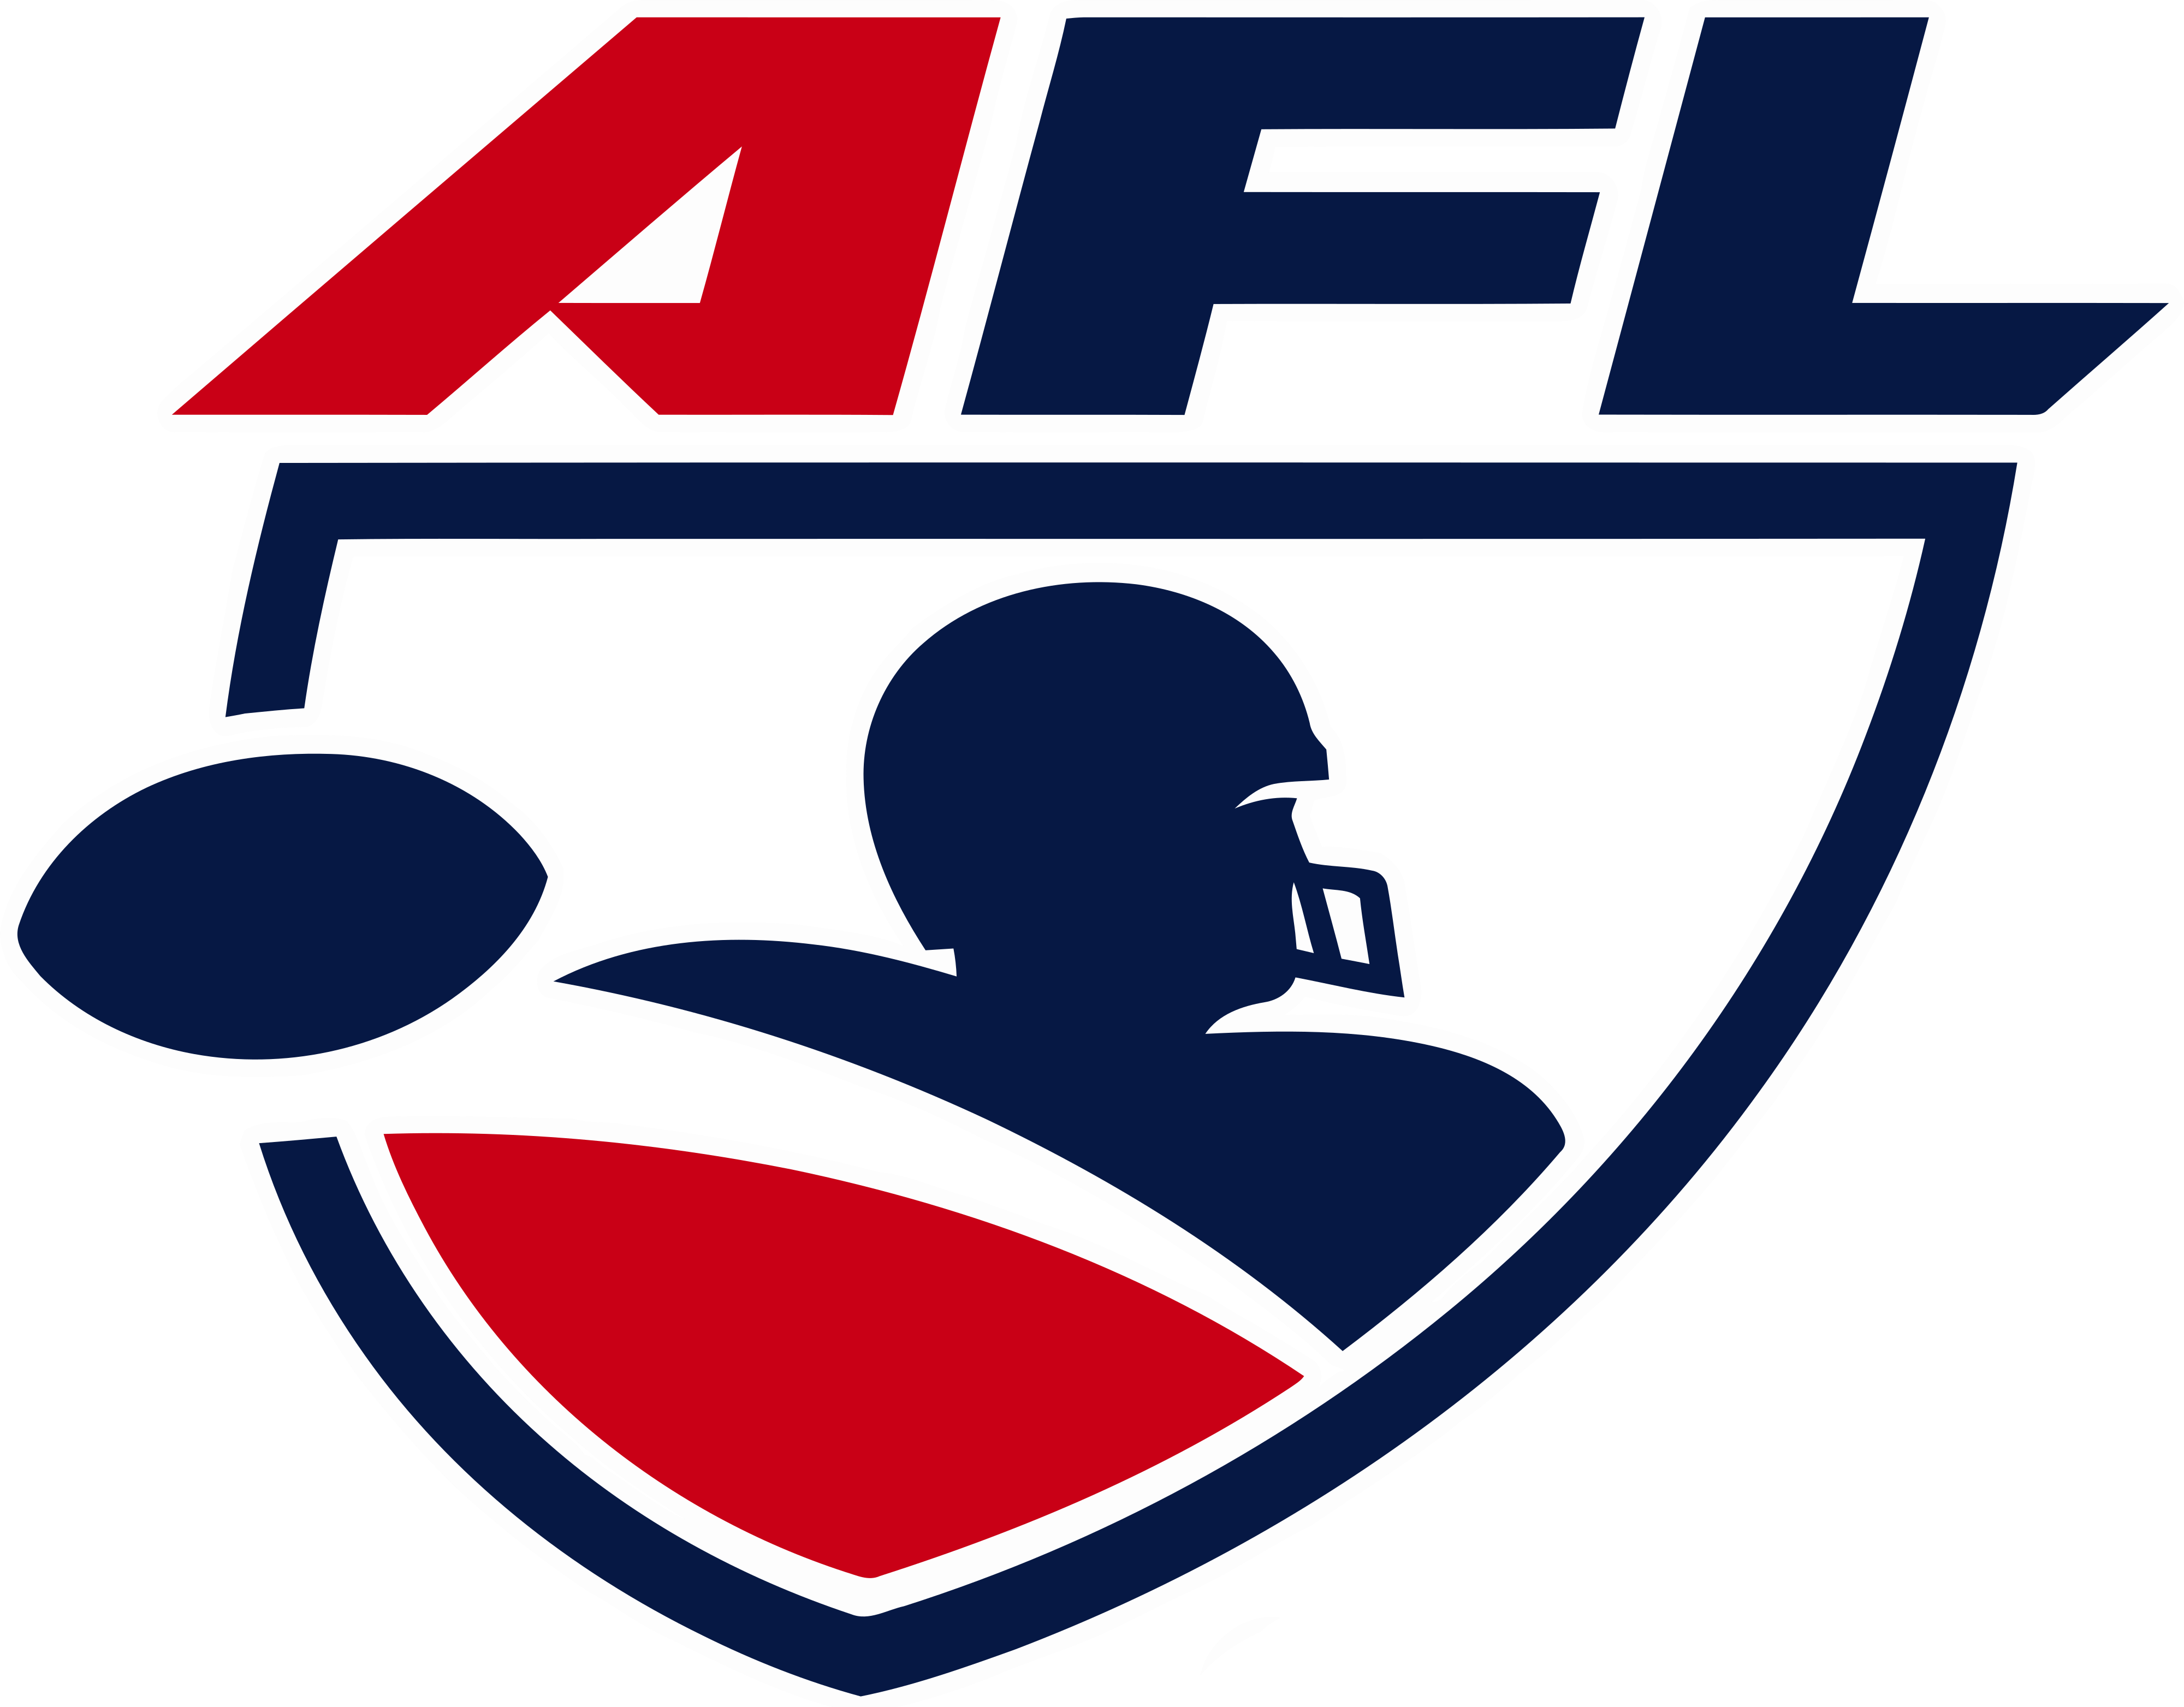 Arena Football League logo download.